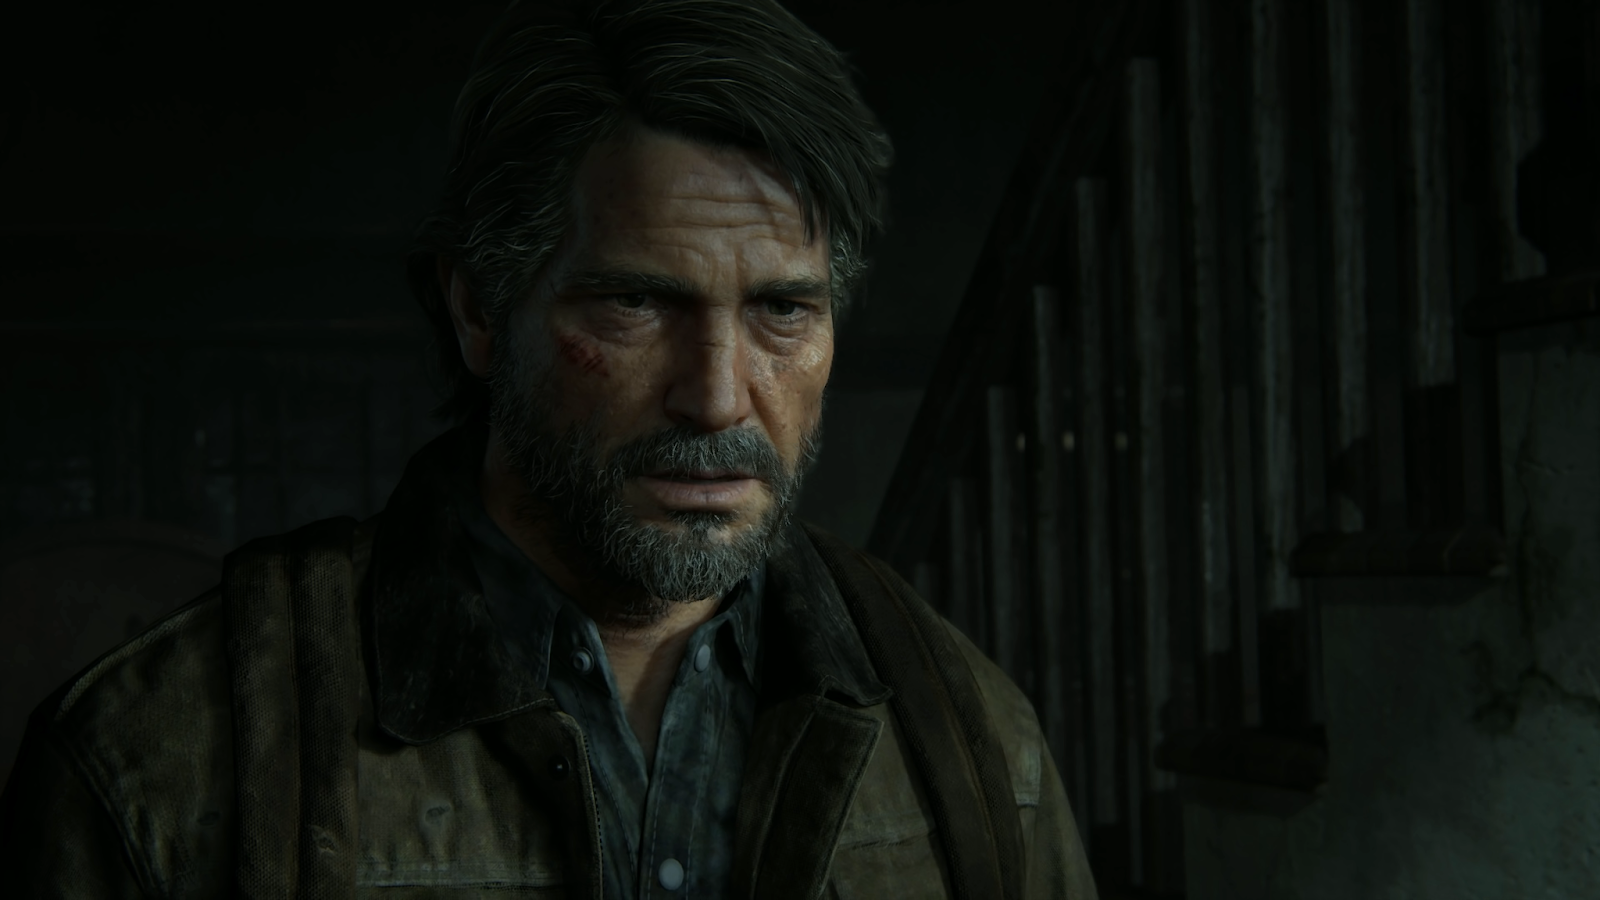 The Last of Us Part II (PS4): suas principais novidades - GameBlast